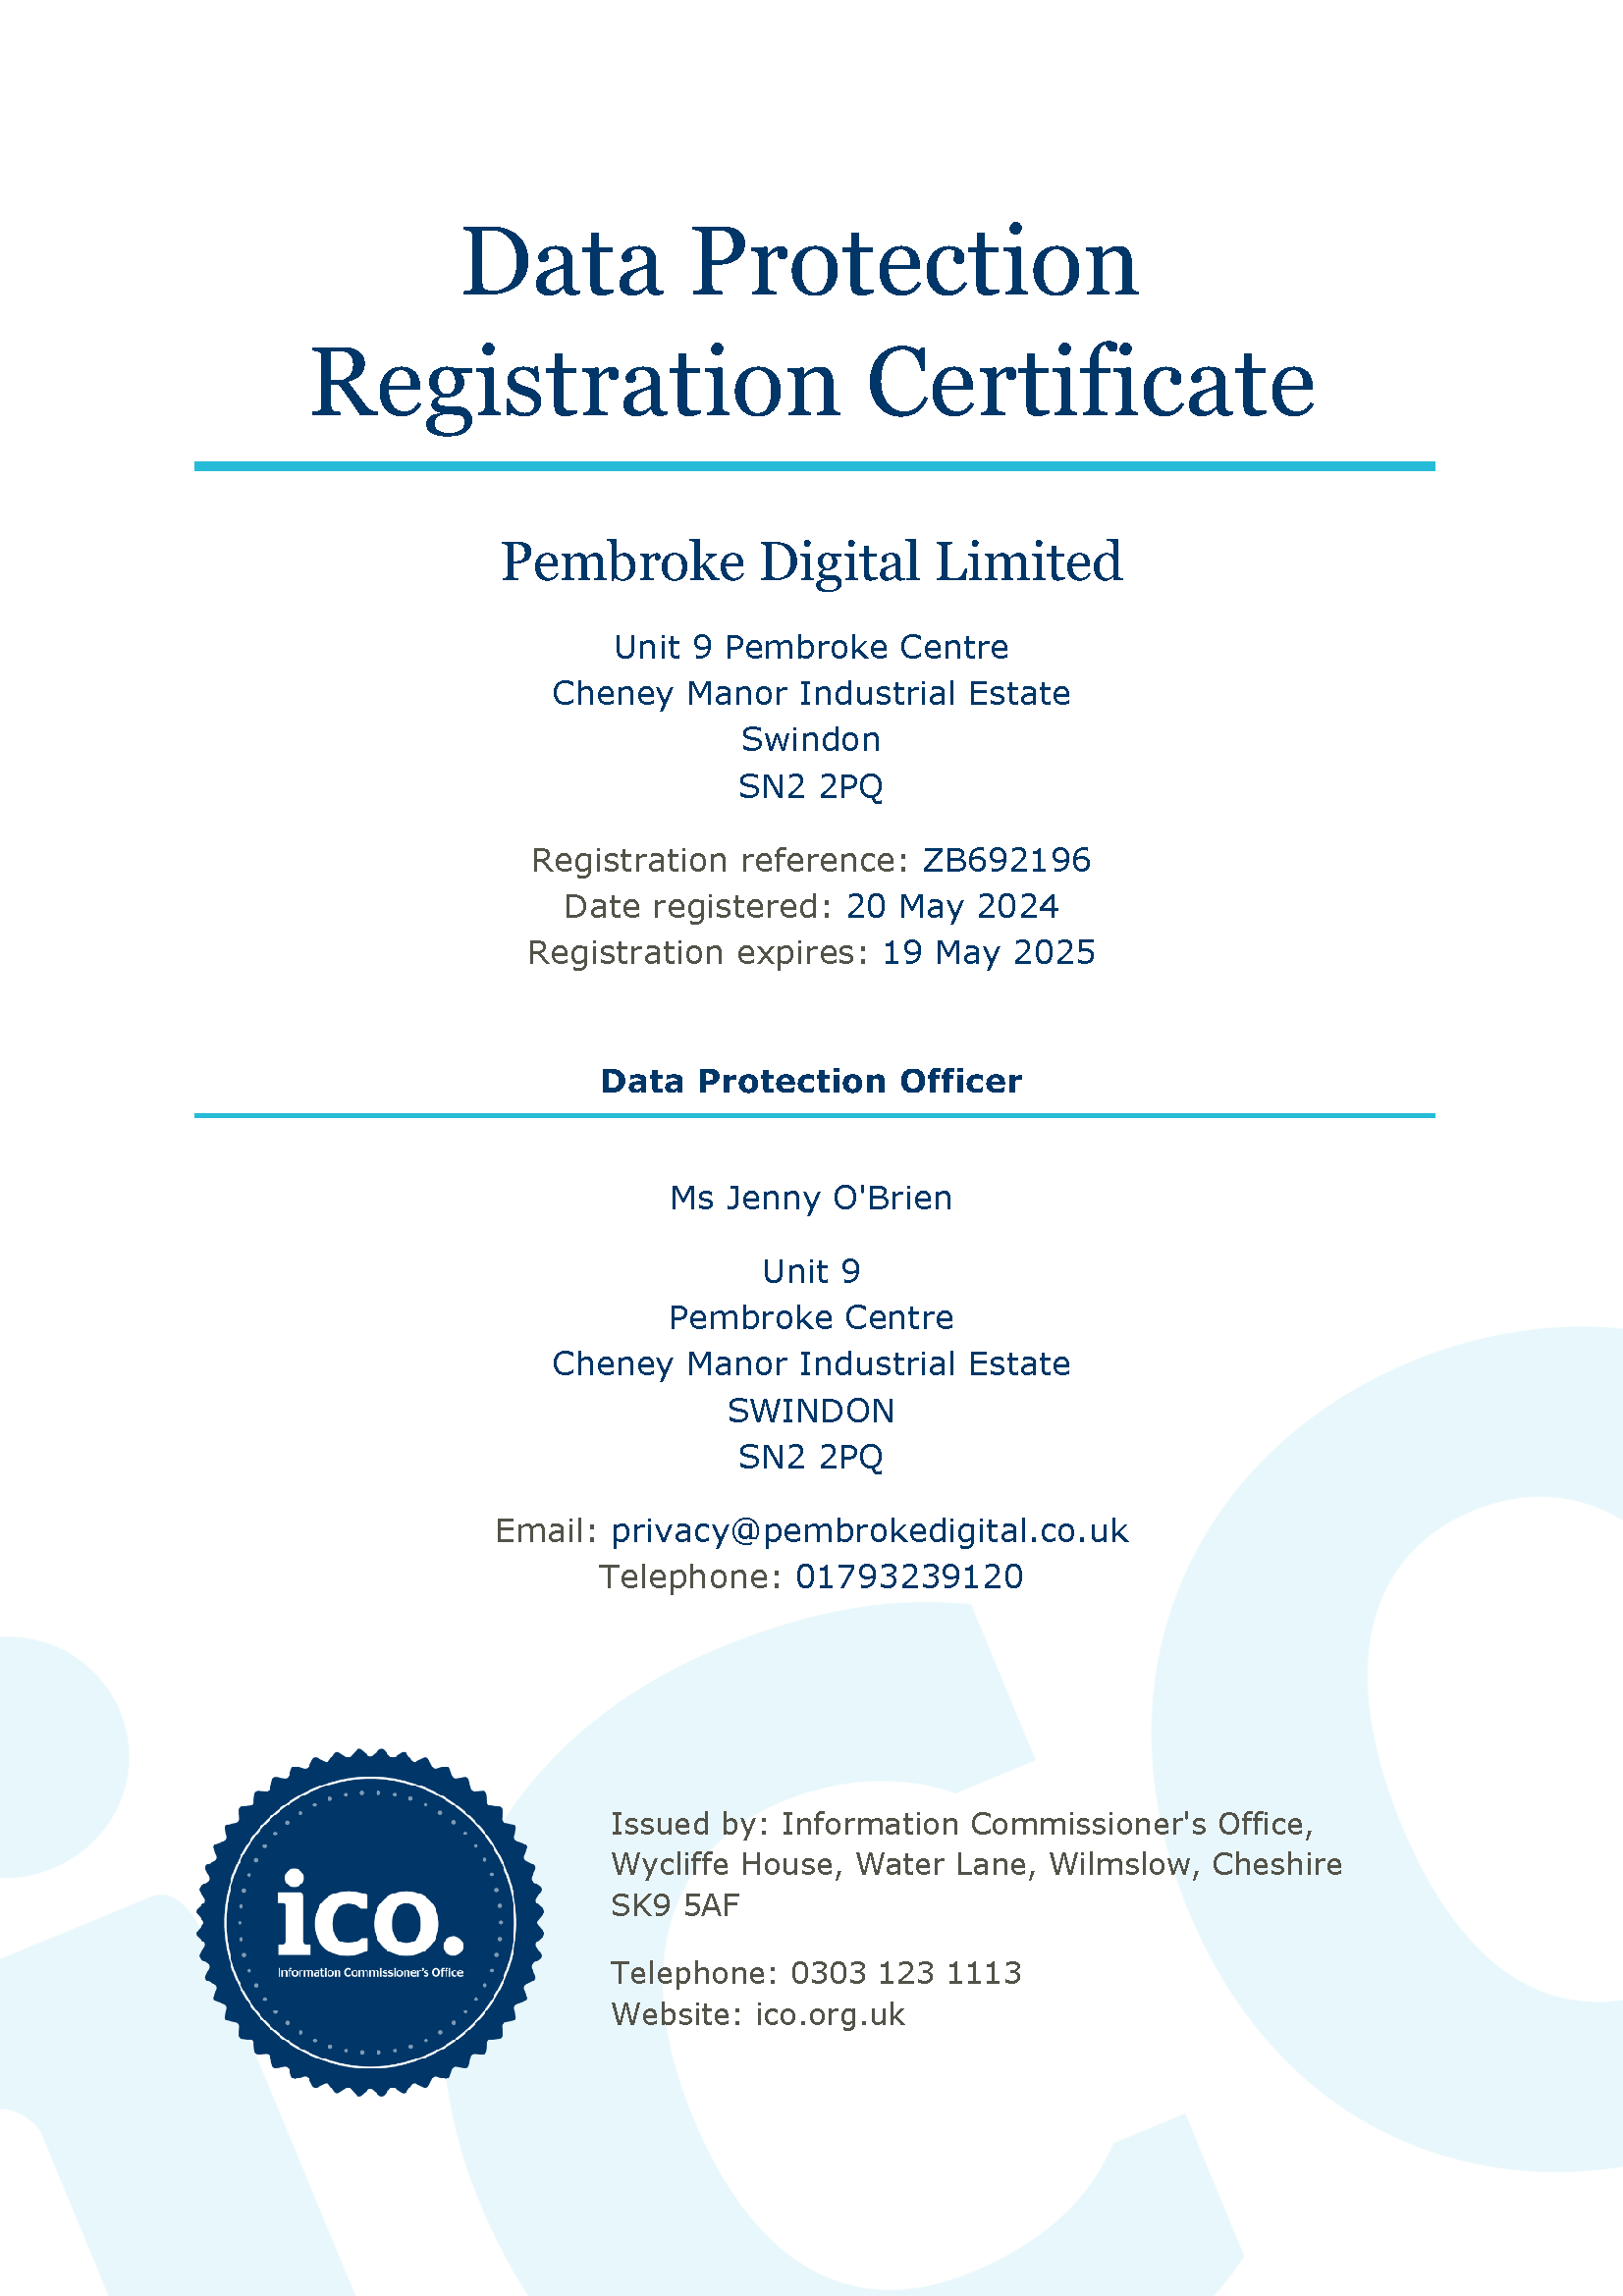 Registration Certificate - ZB692196